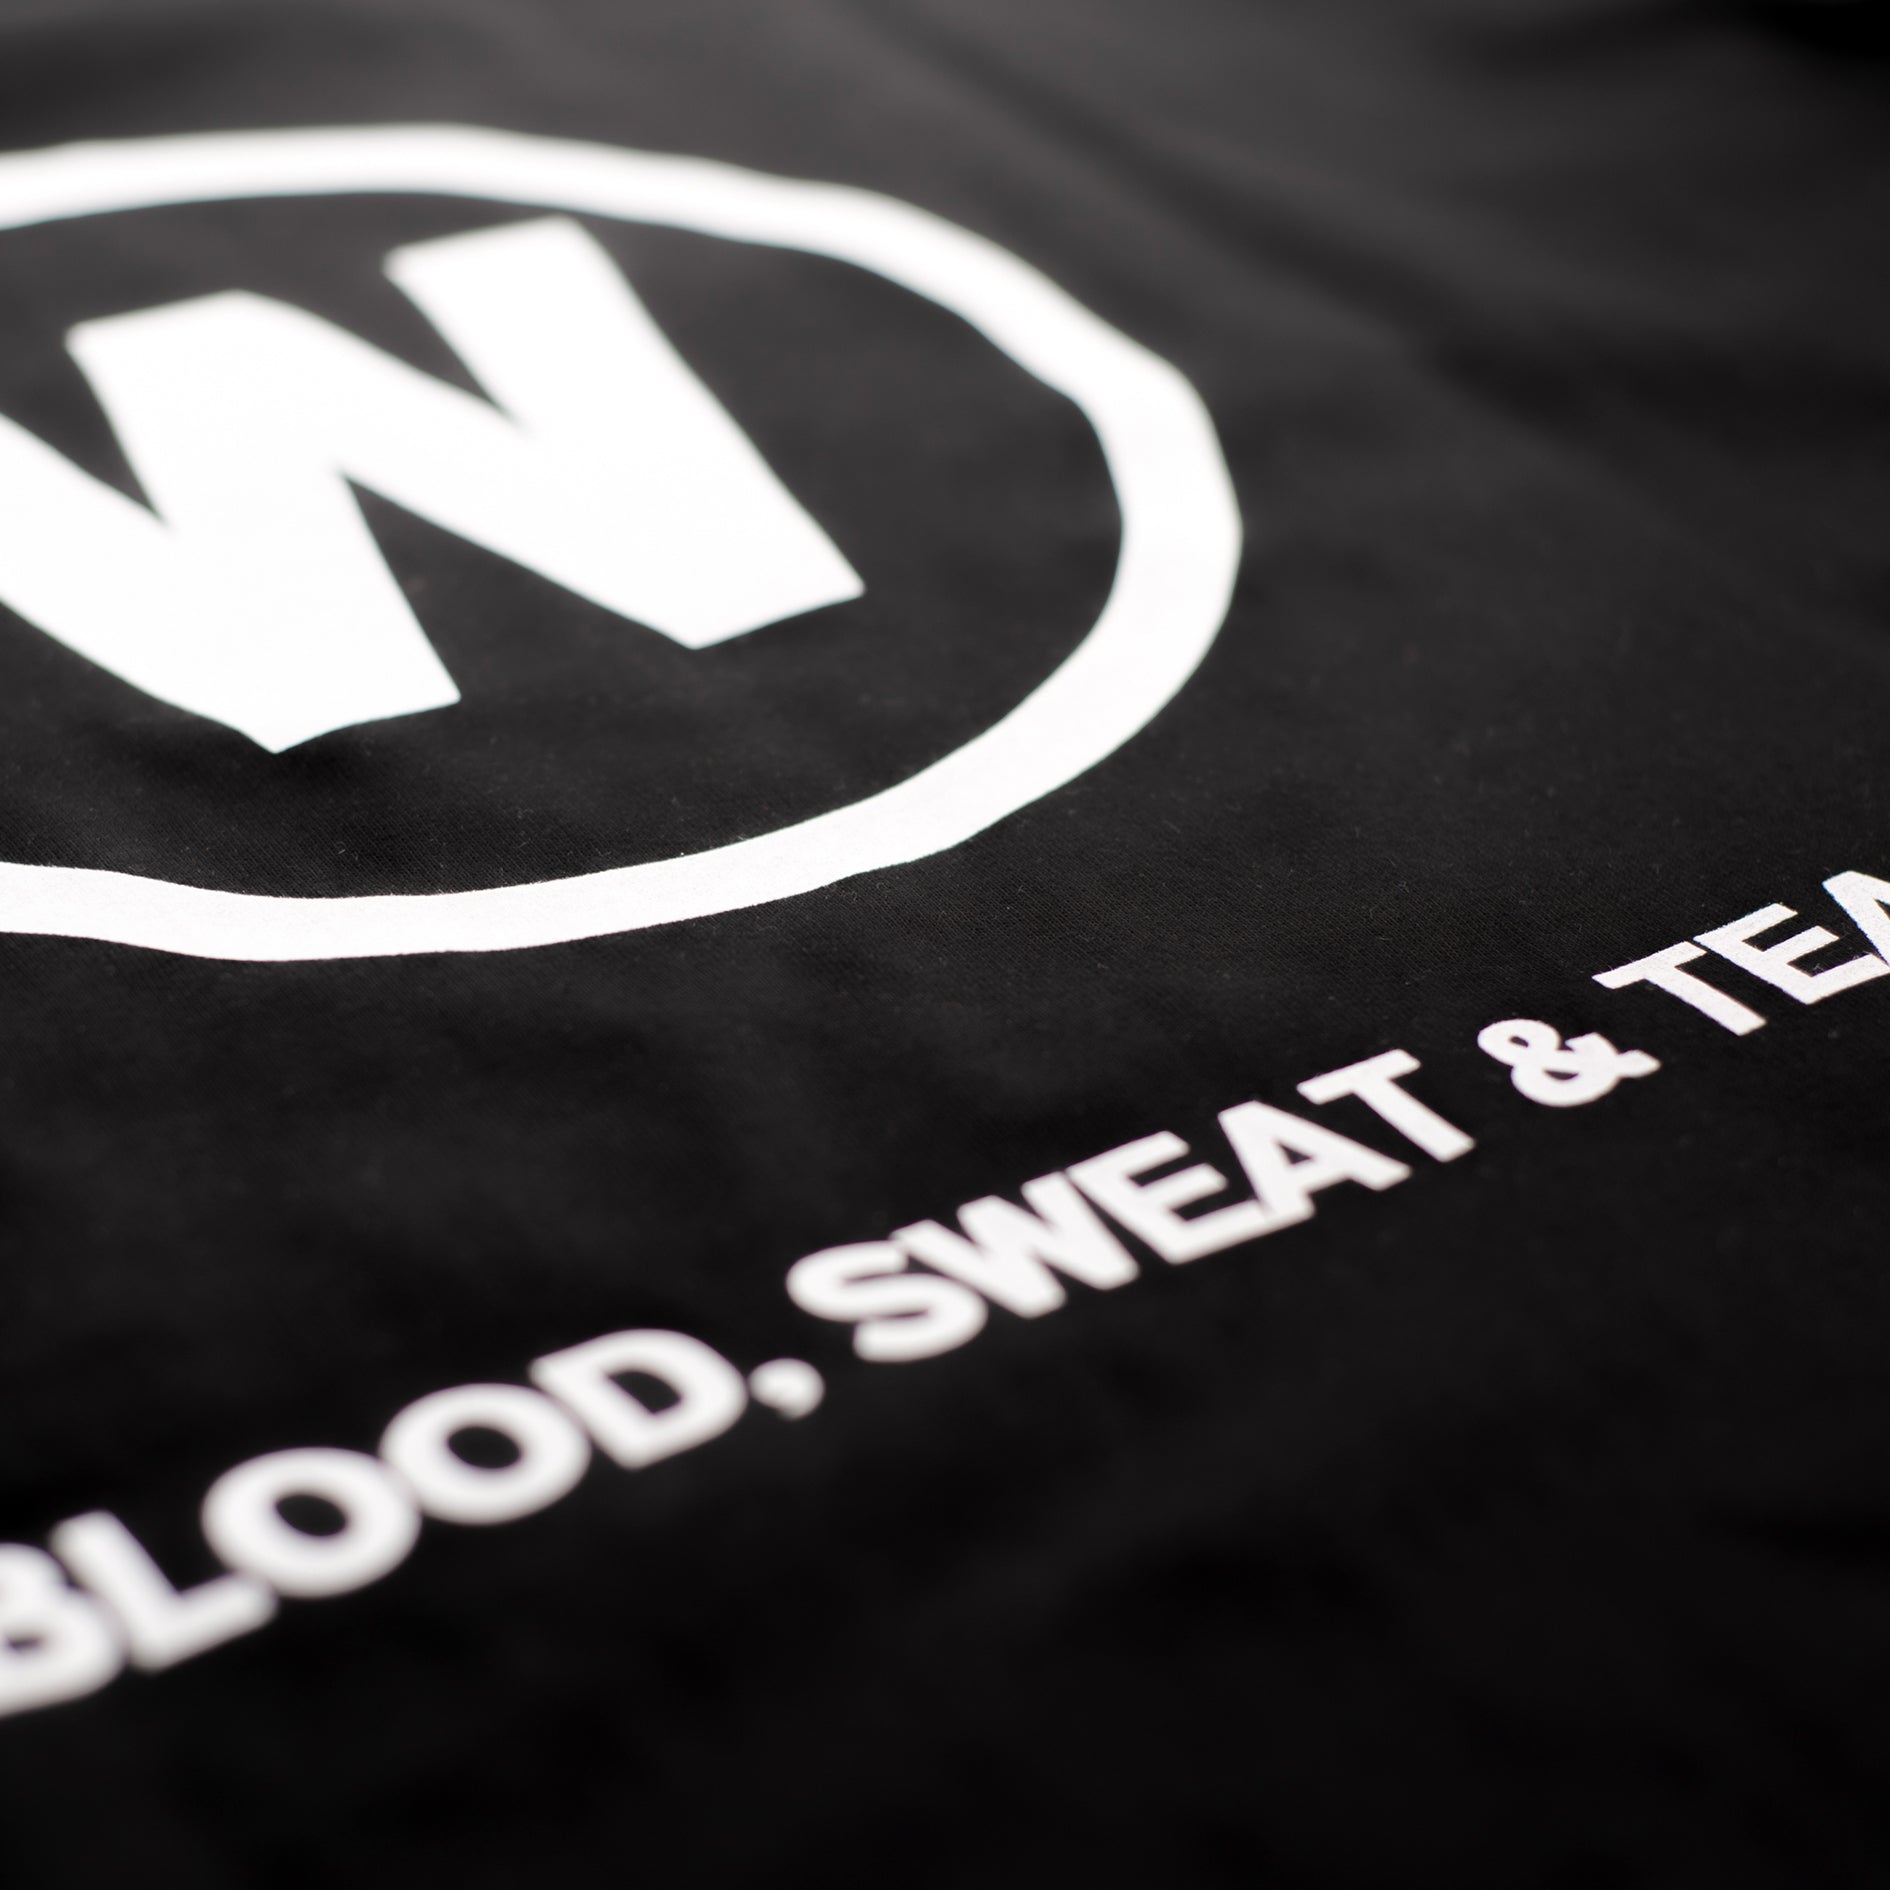 // The W - Blood, Sweat & Tears T-Shirt